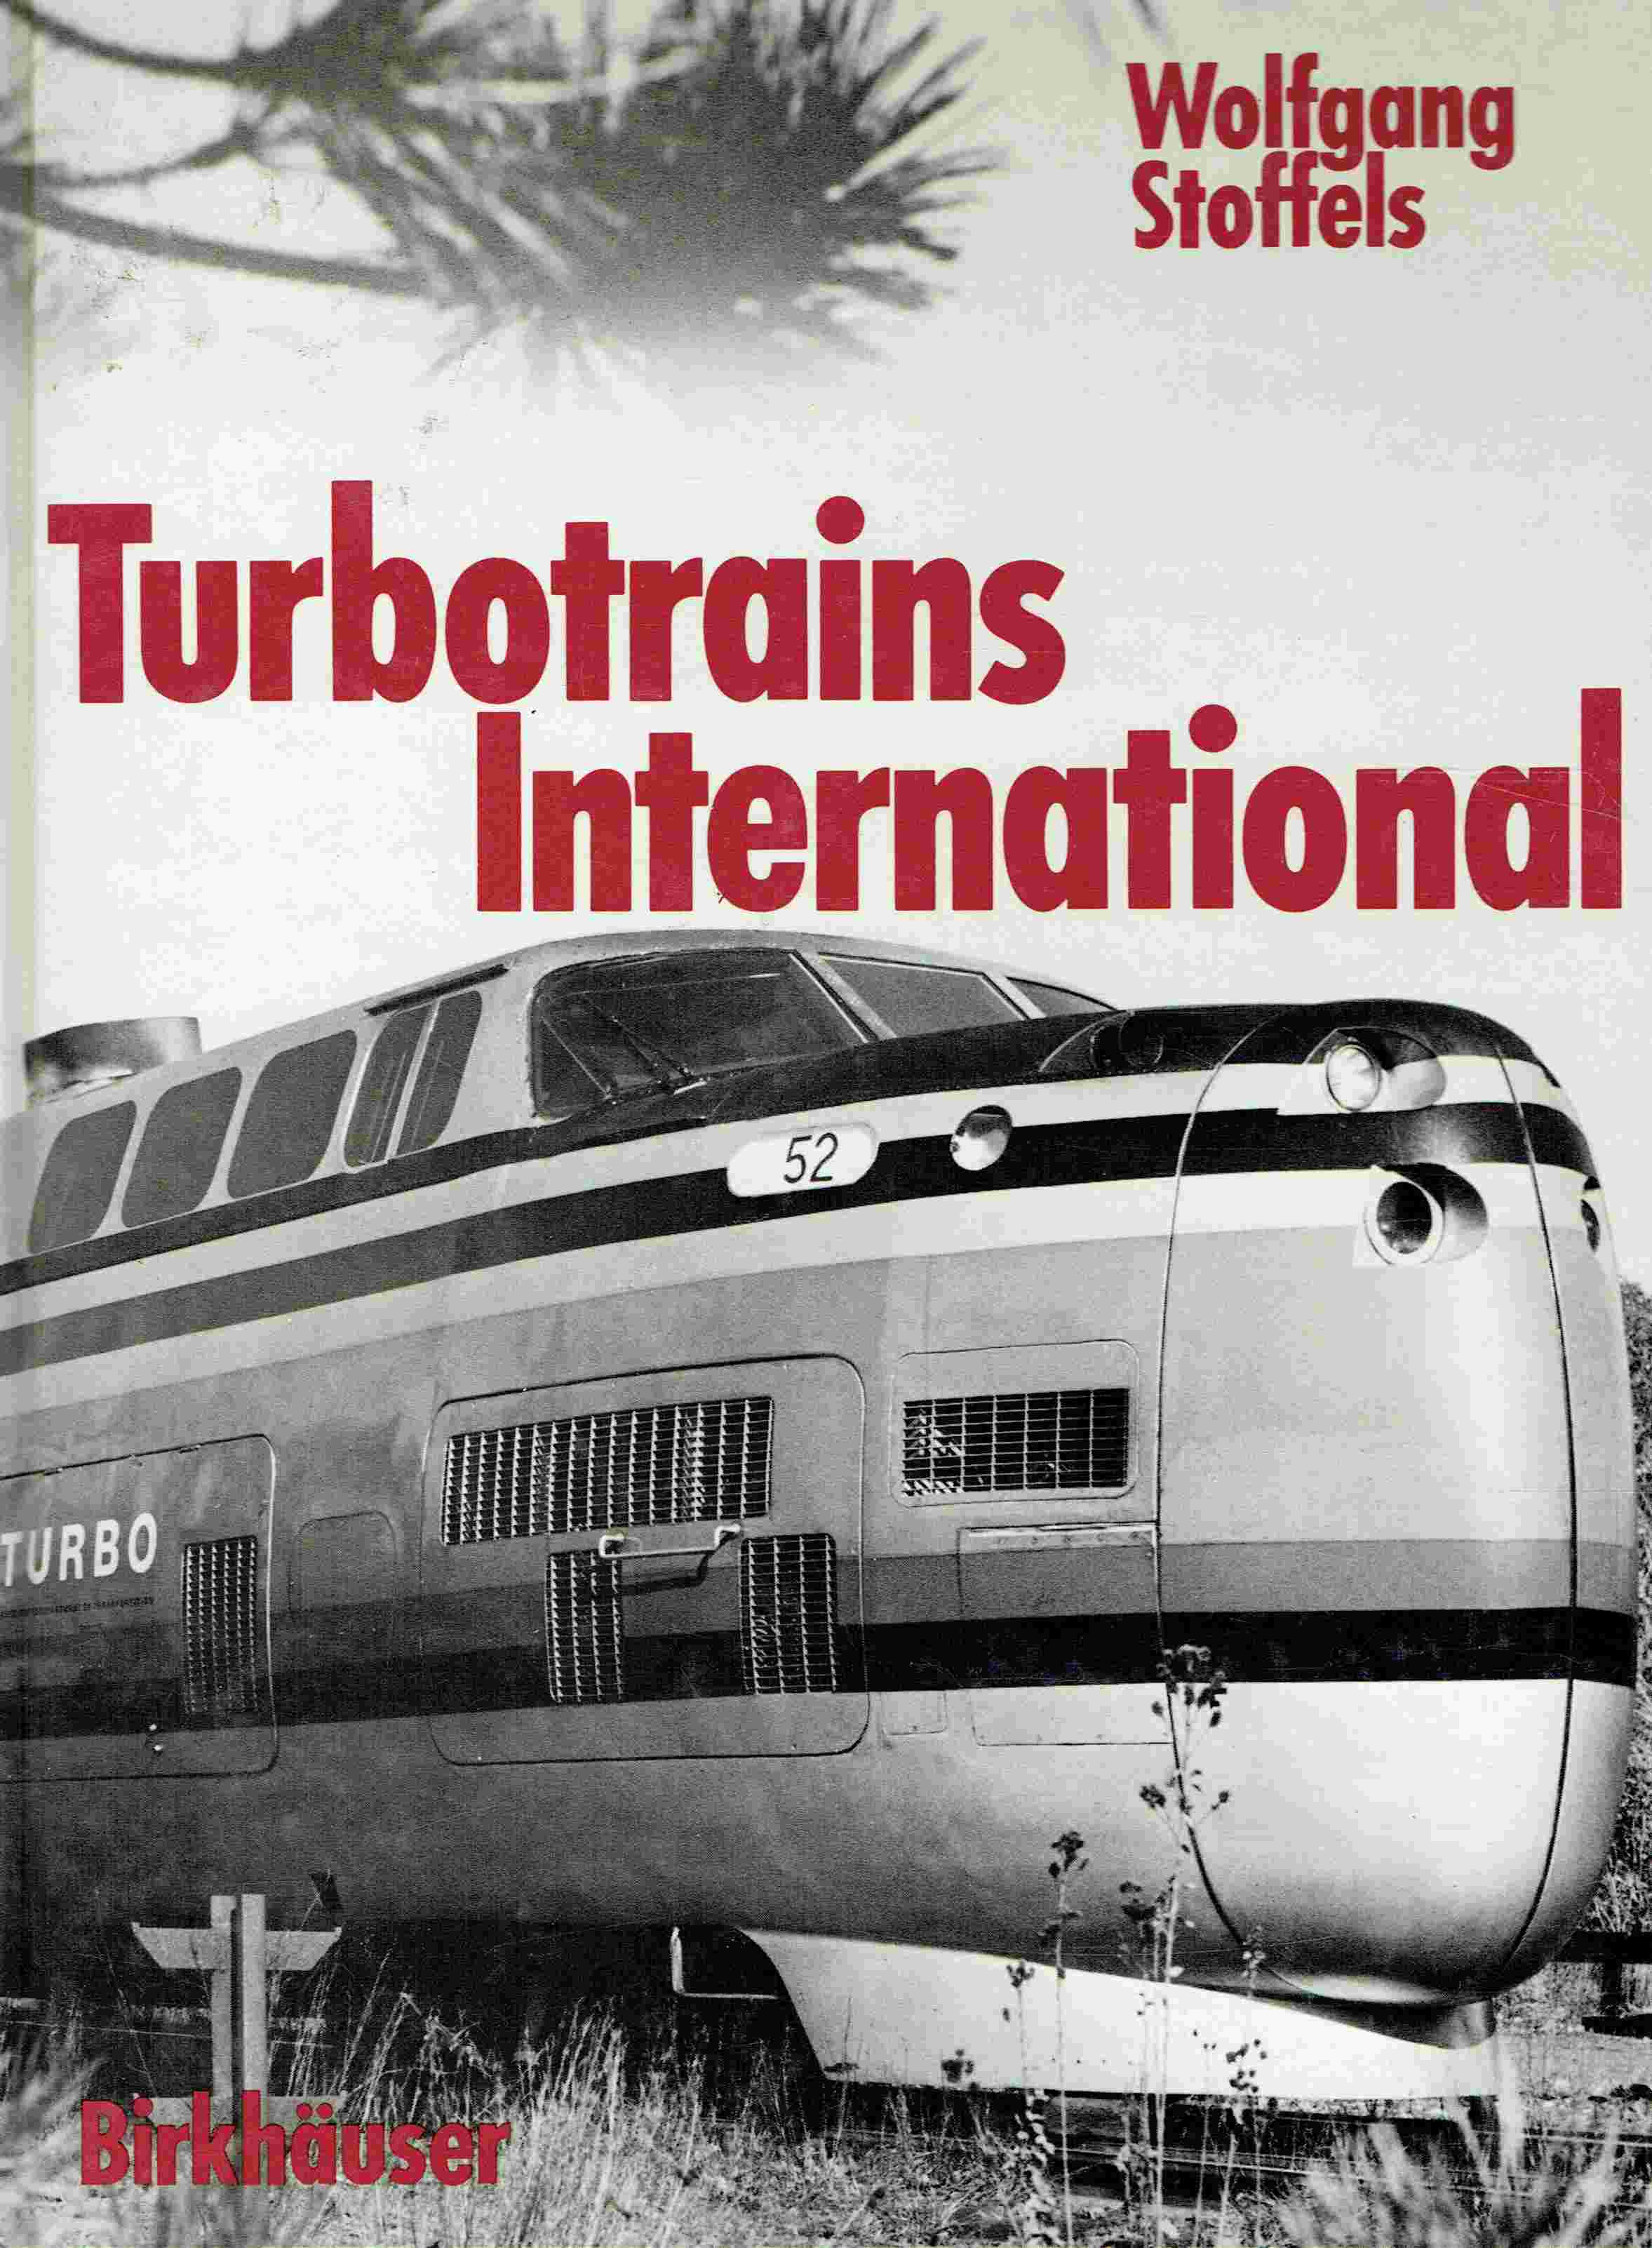 Turbotrains International. - Wolfgang Stoffels